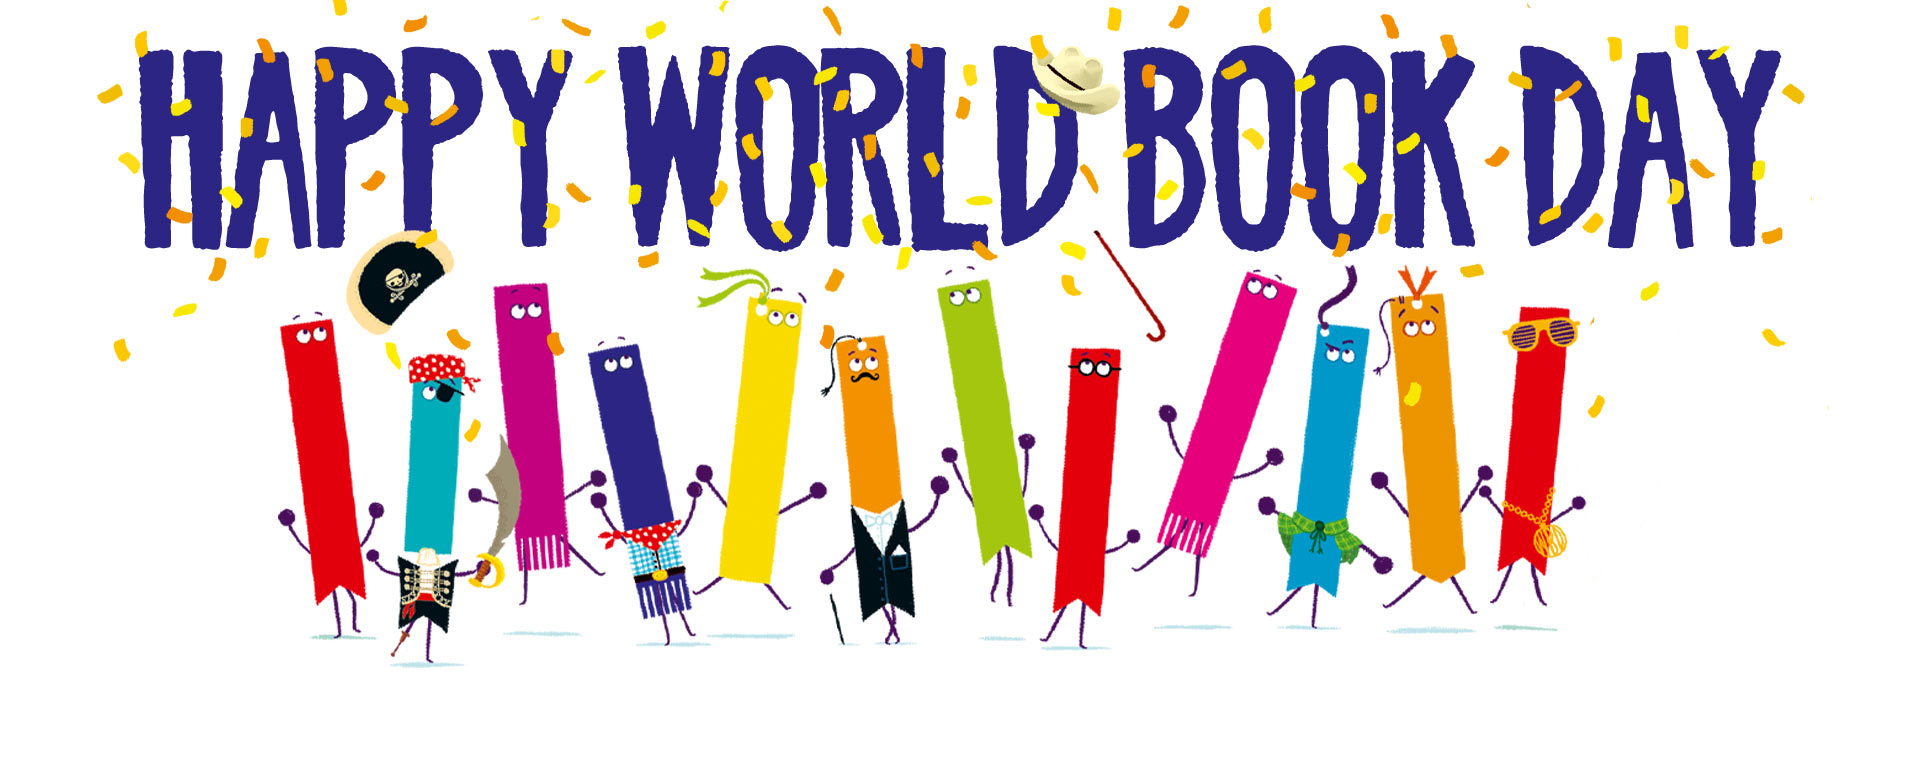 Happy World Book Day carousel 2